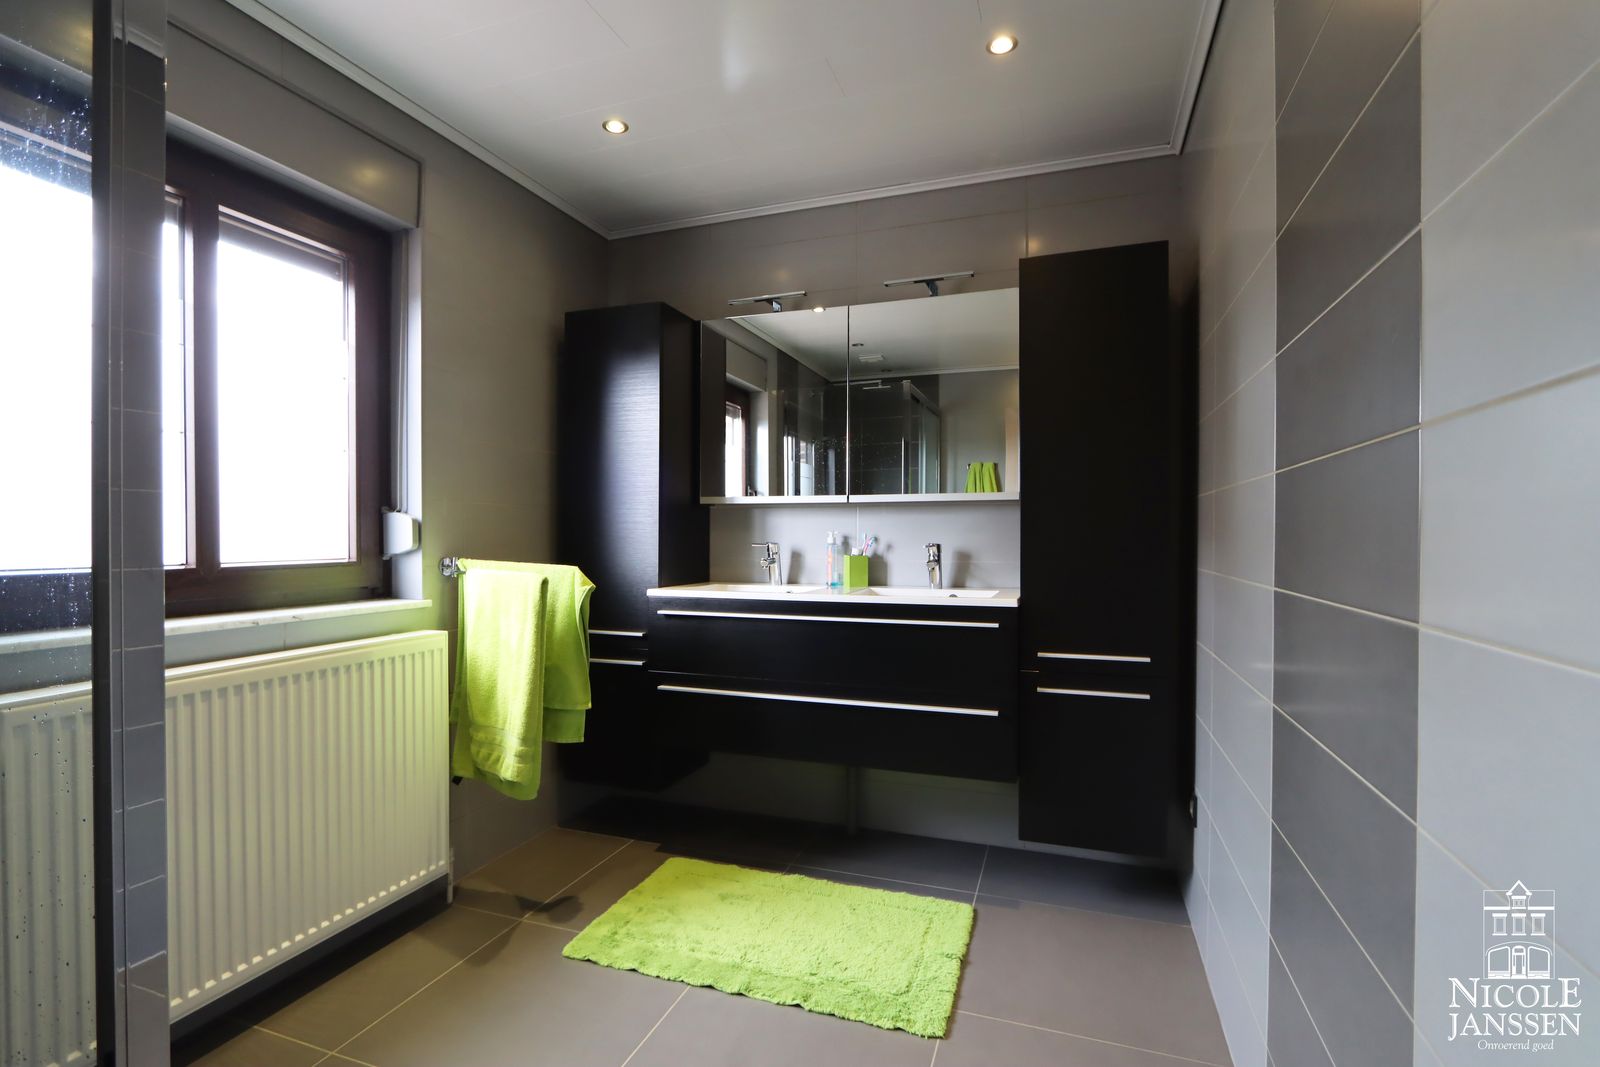 12 Nicole Janssen - huis te koop - Venlosesteenweg 359 Kessenich - badkamer3.jpg